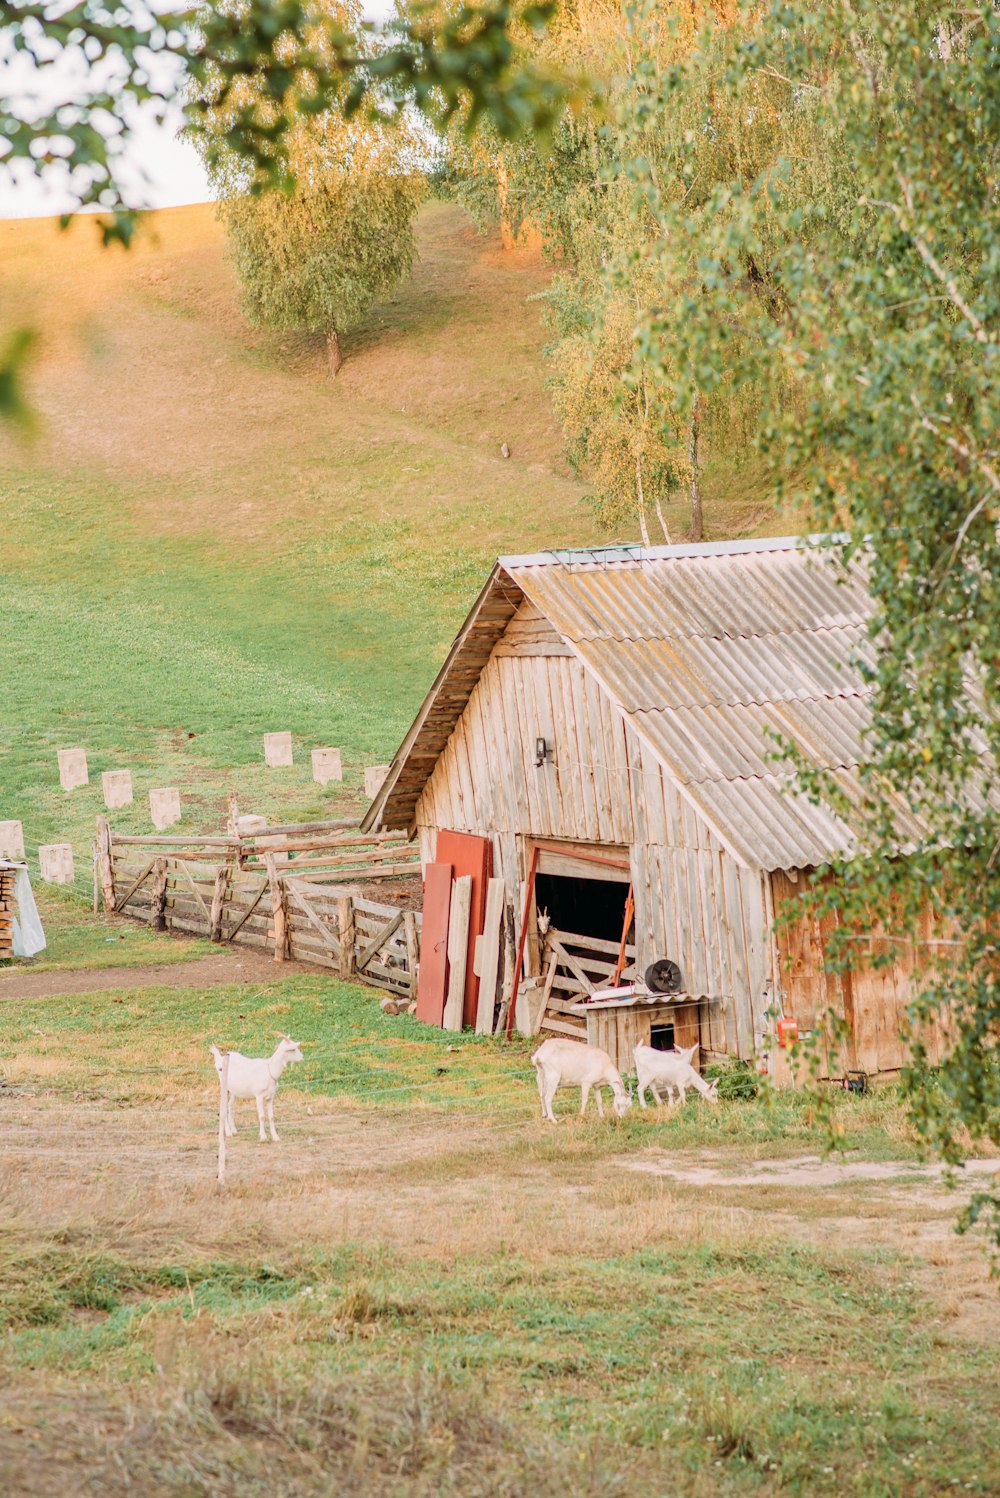 brown wooden barn near green grass field during daytime